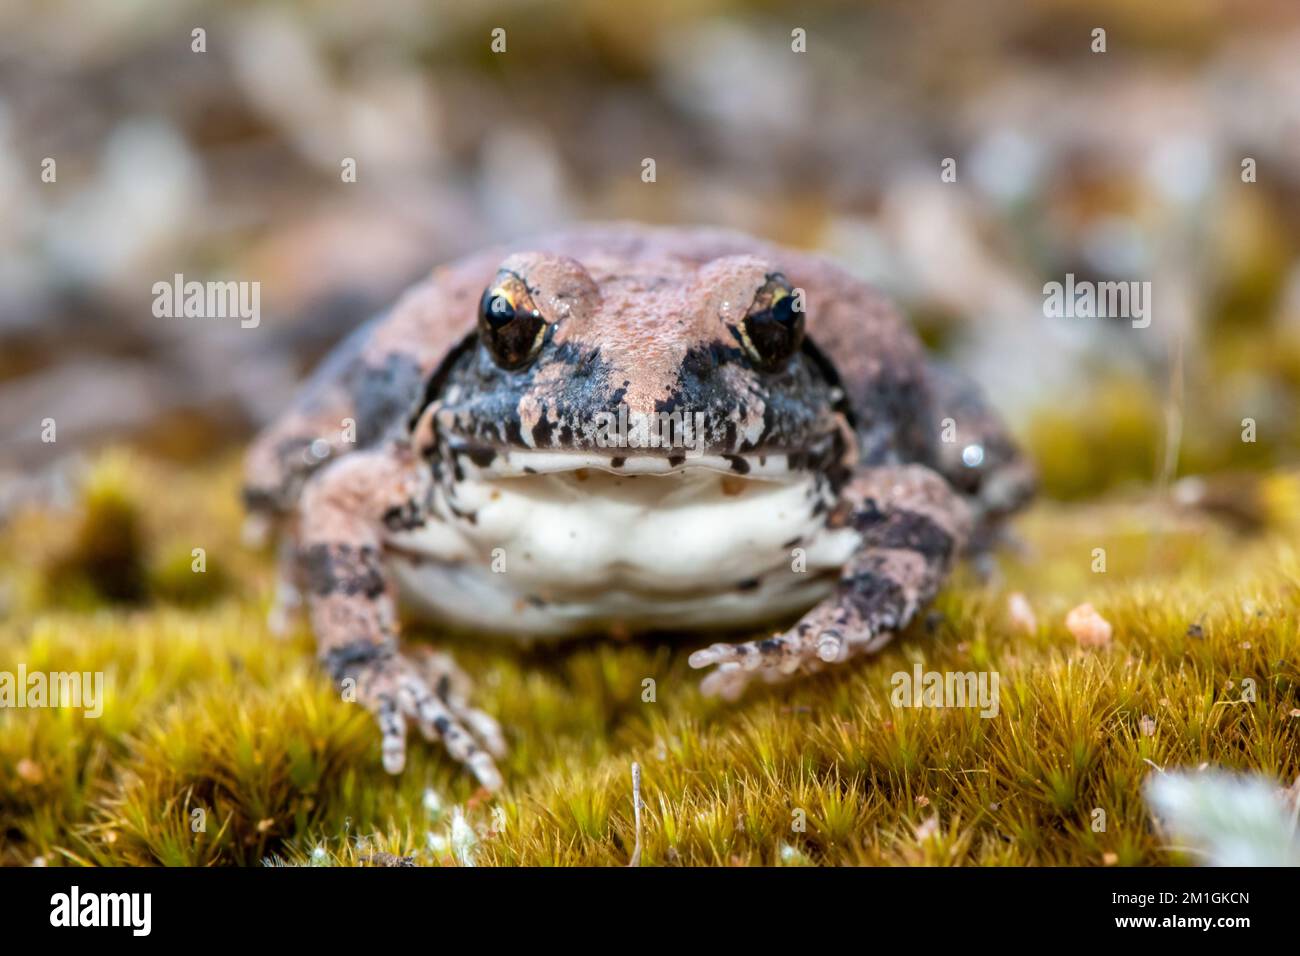 Photographie frontale d'une grenouille natale (Tomopterna natalensis) Banque D'Images